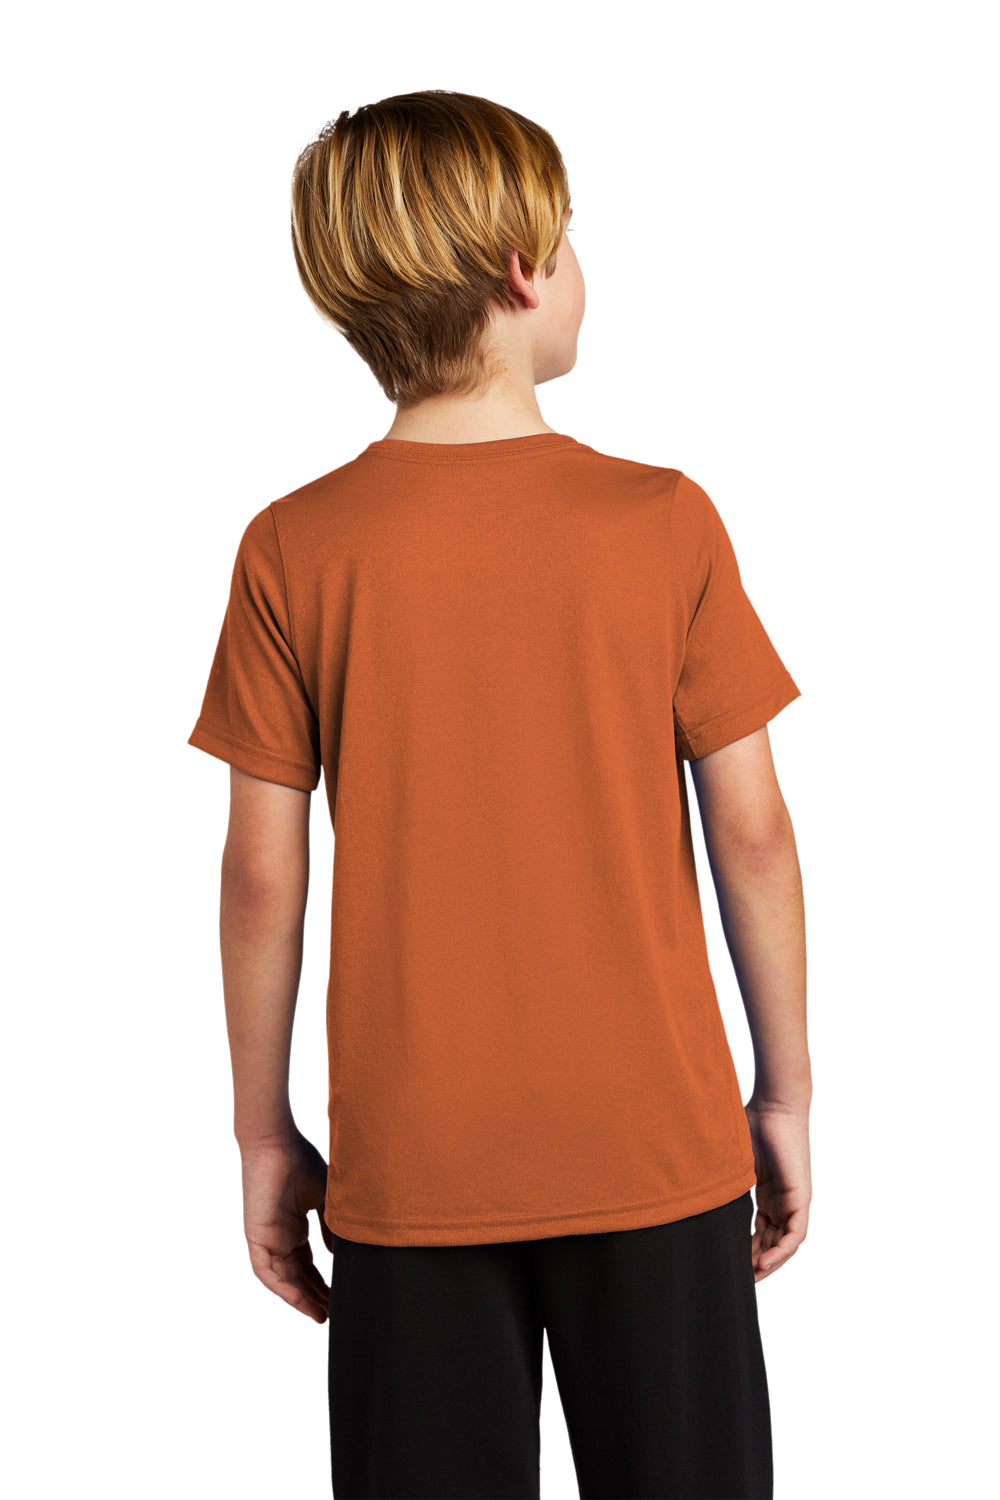 Nike 840178 Youth Legend Dri-Fit Moisture Wicking Short Sleeve Crewneck T-Shirt Desert Orange Model Back